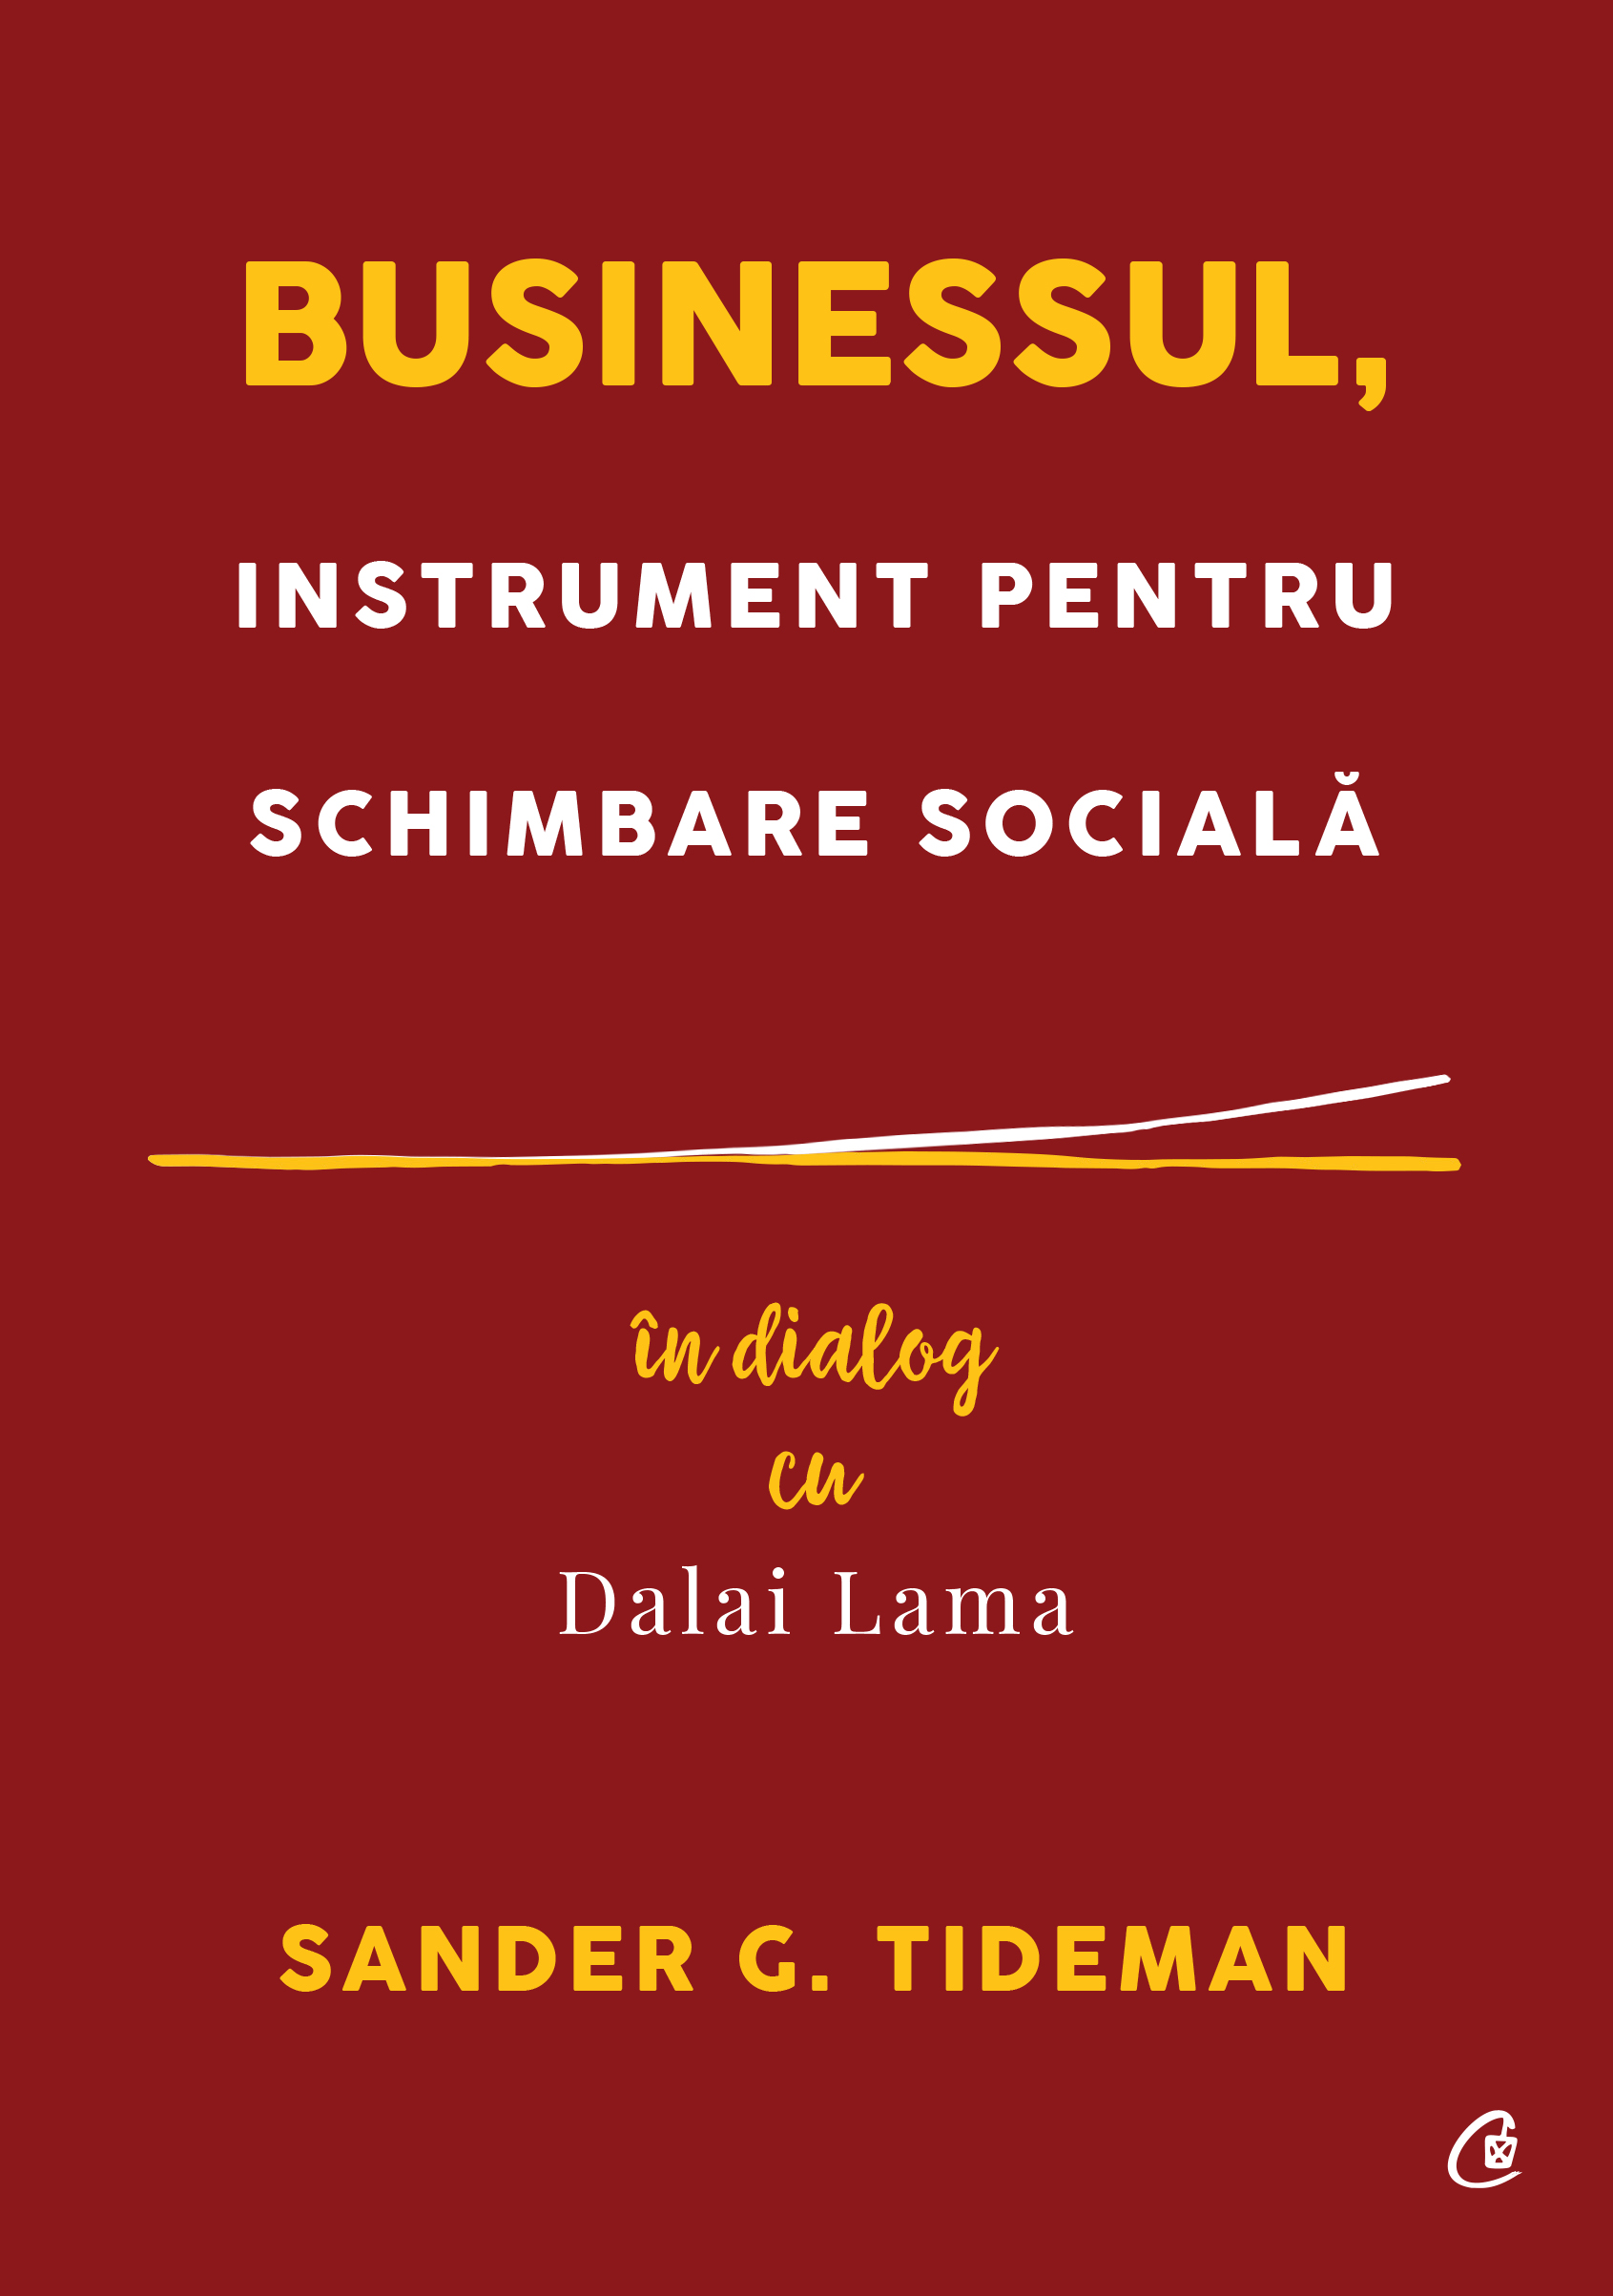 Businessul, Instrument Pentru Schimbare Sociala | Sander G. Tideman